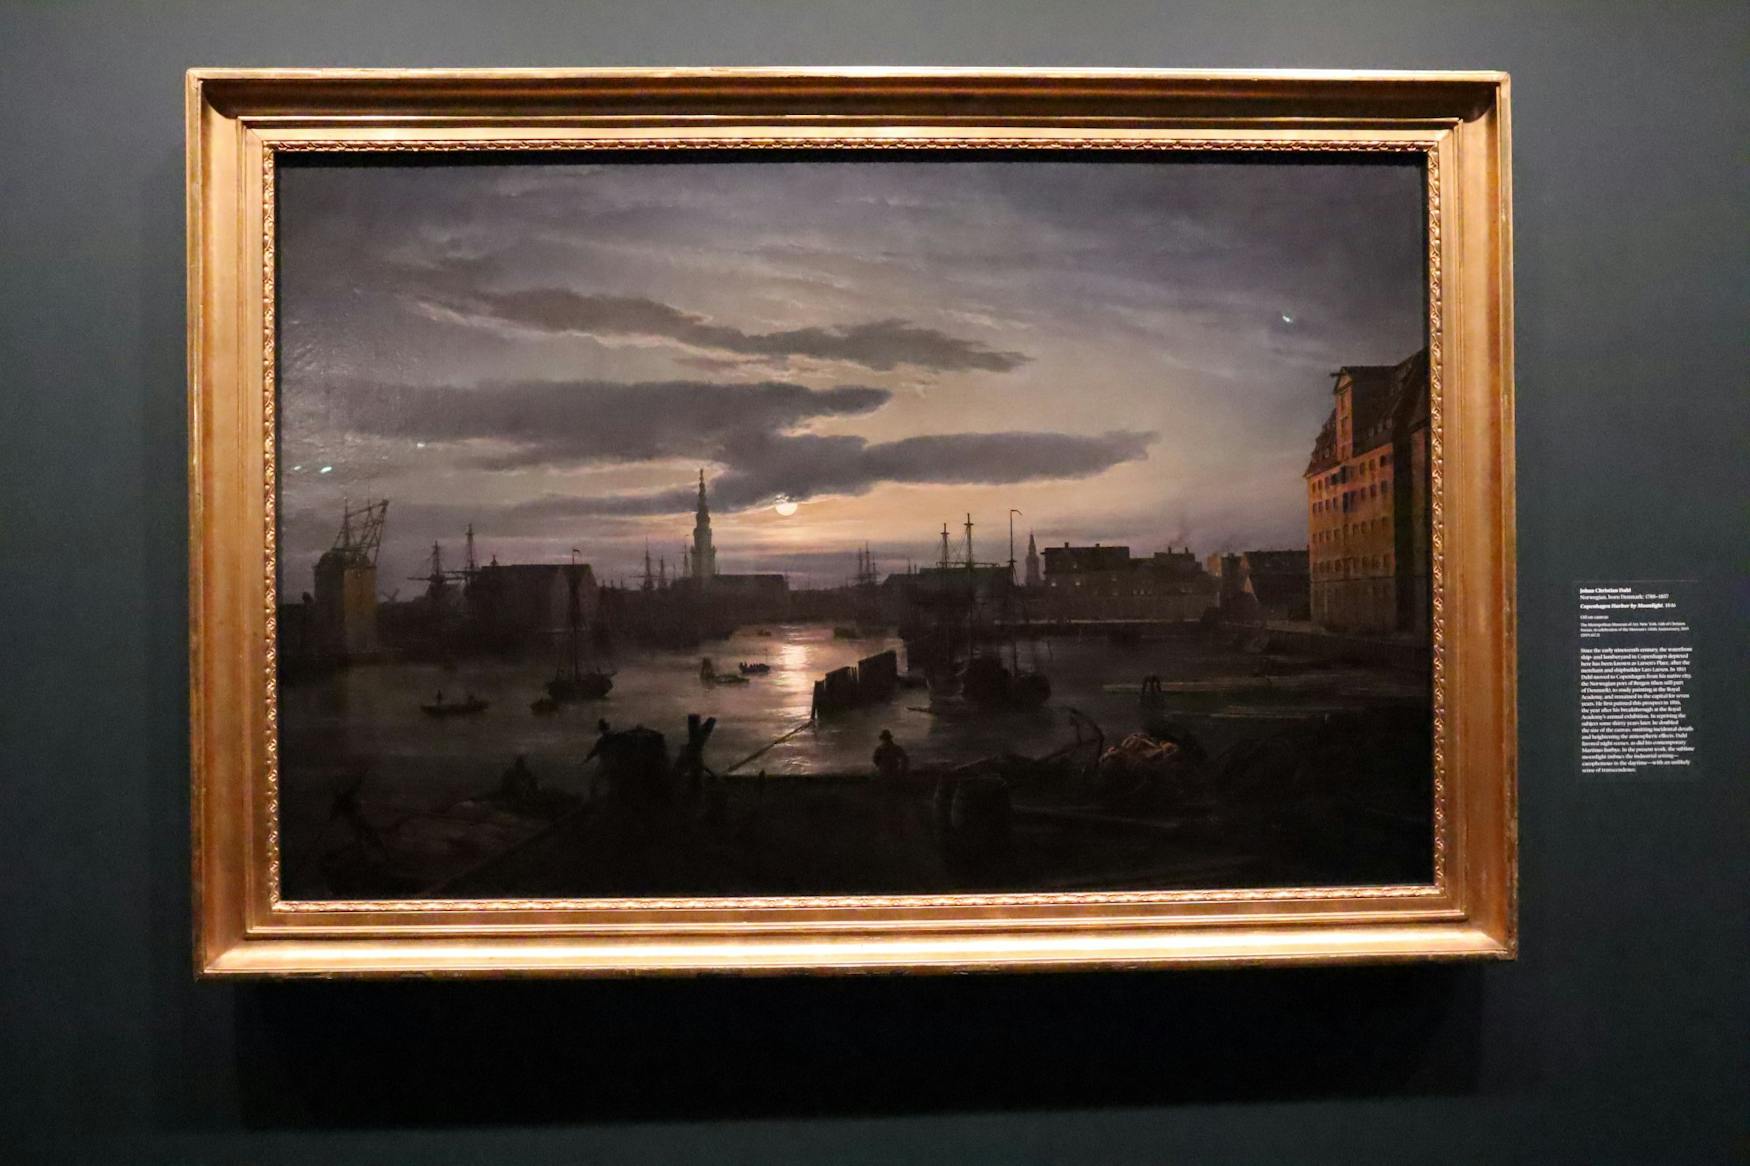 DAHL: A Norwegian artist created 'Copenhagen Harbor by Moonlight' in 1846 depicting a waterfront and lumberyard.